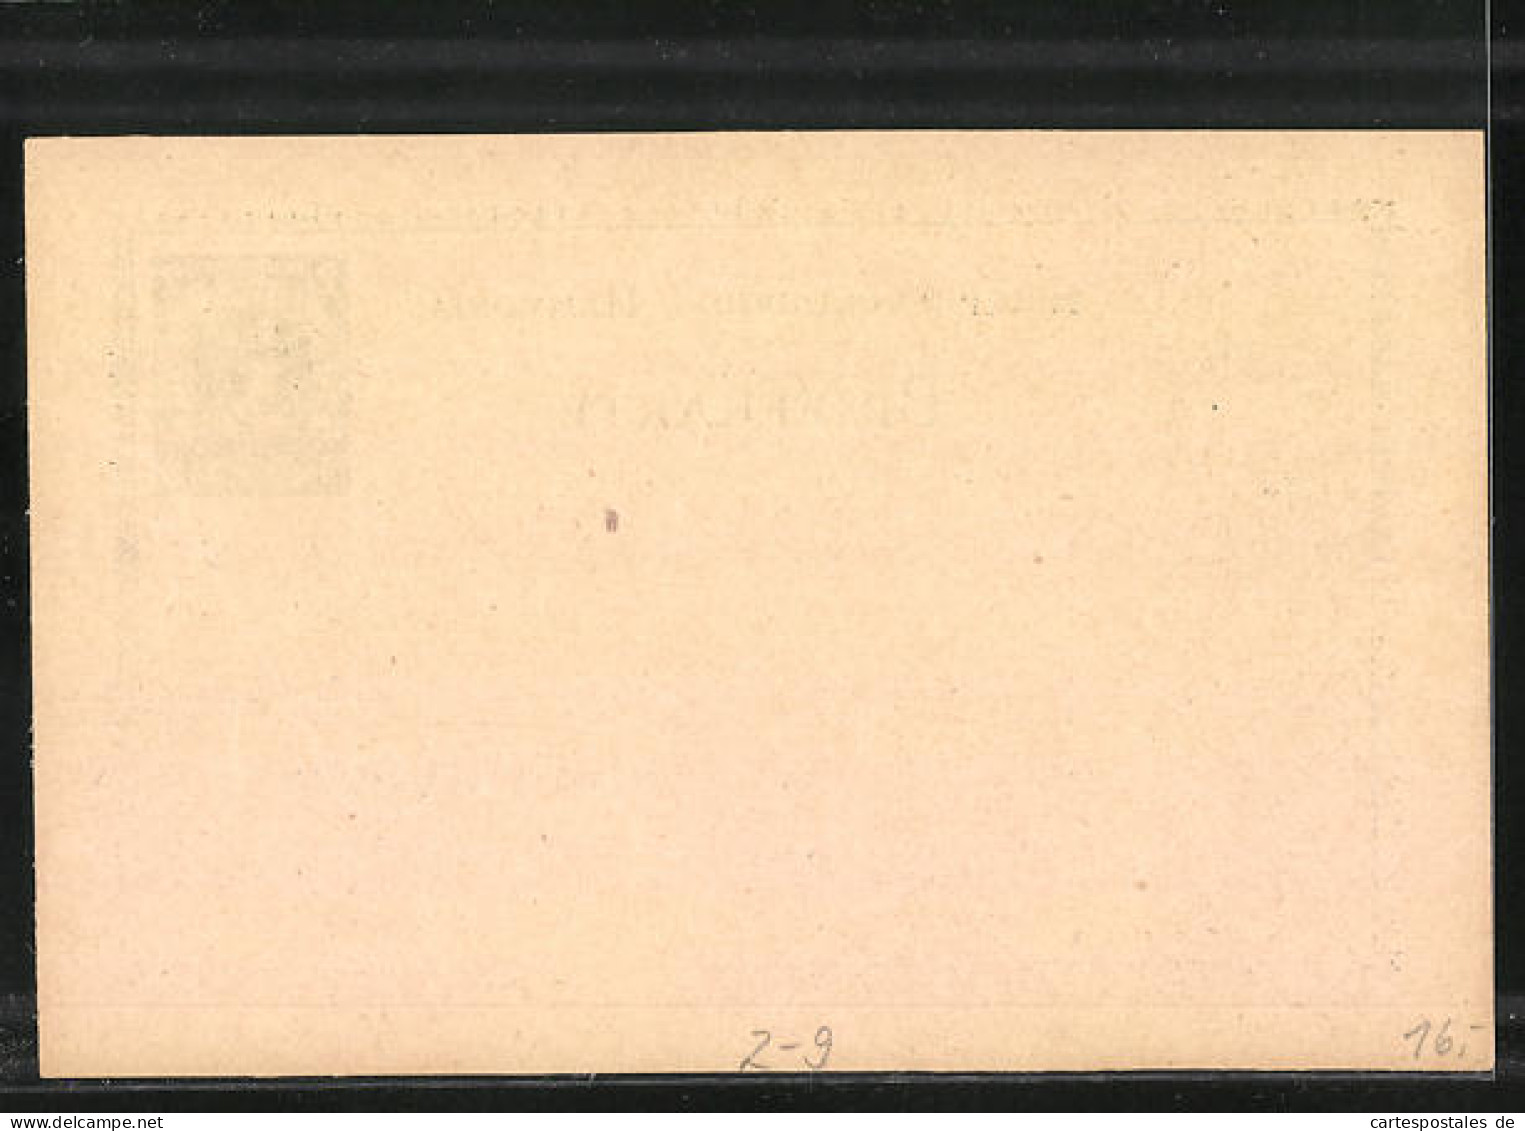 AK Briefkarte, Private Stadtpost Hammonia Hamburg, 2 Pfg.  - Timbres (représentations)